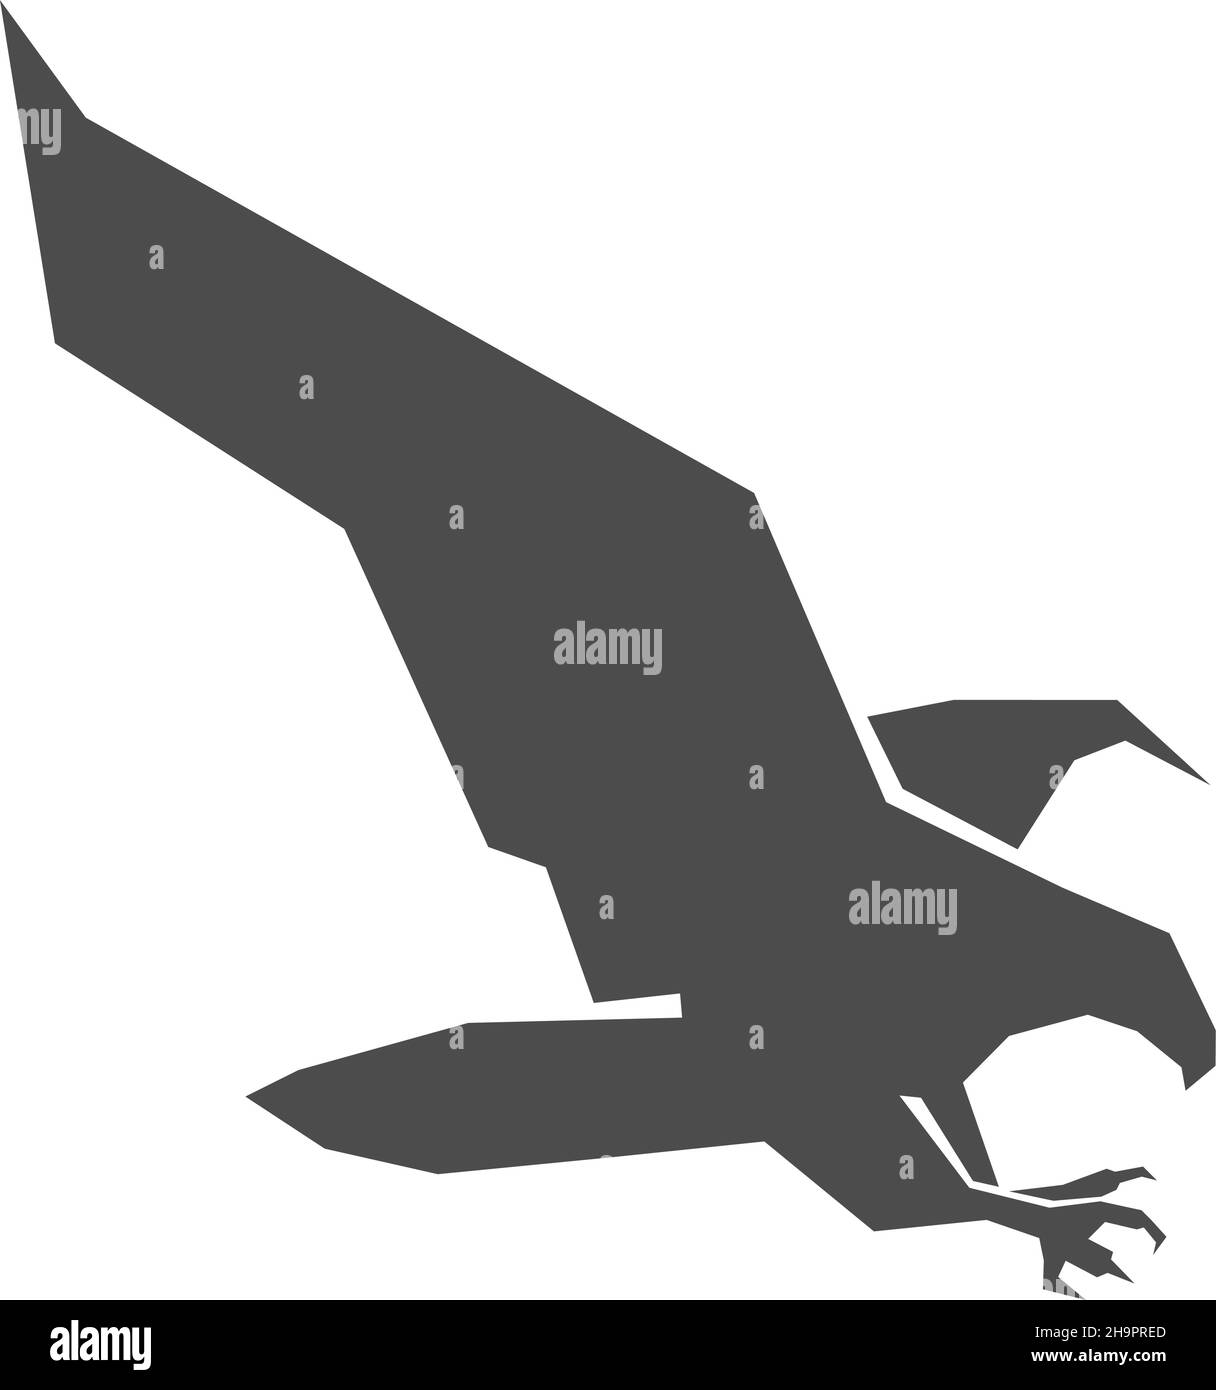 Adler landet auf Beute. Graue Vogel-Silhouette. Hawk-Symbol Stock Vektor